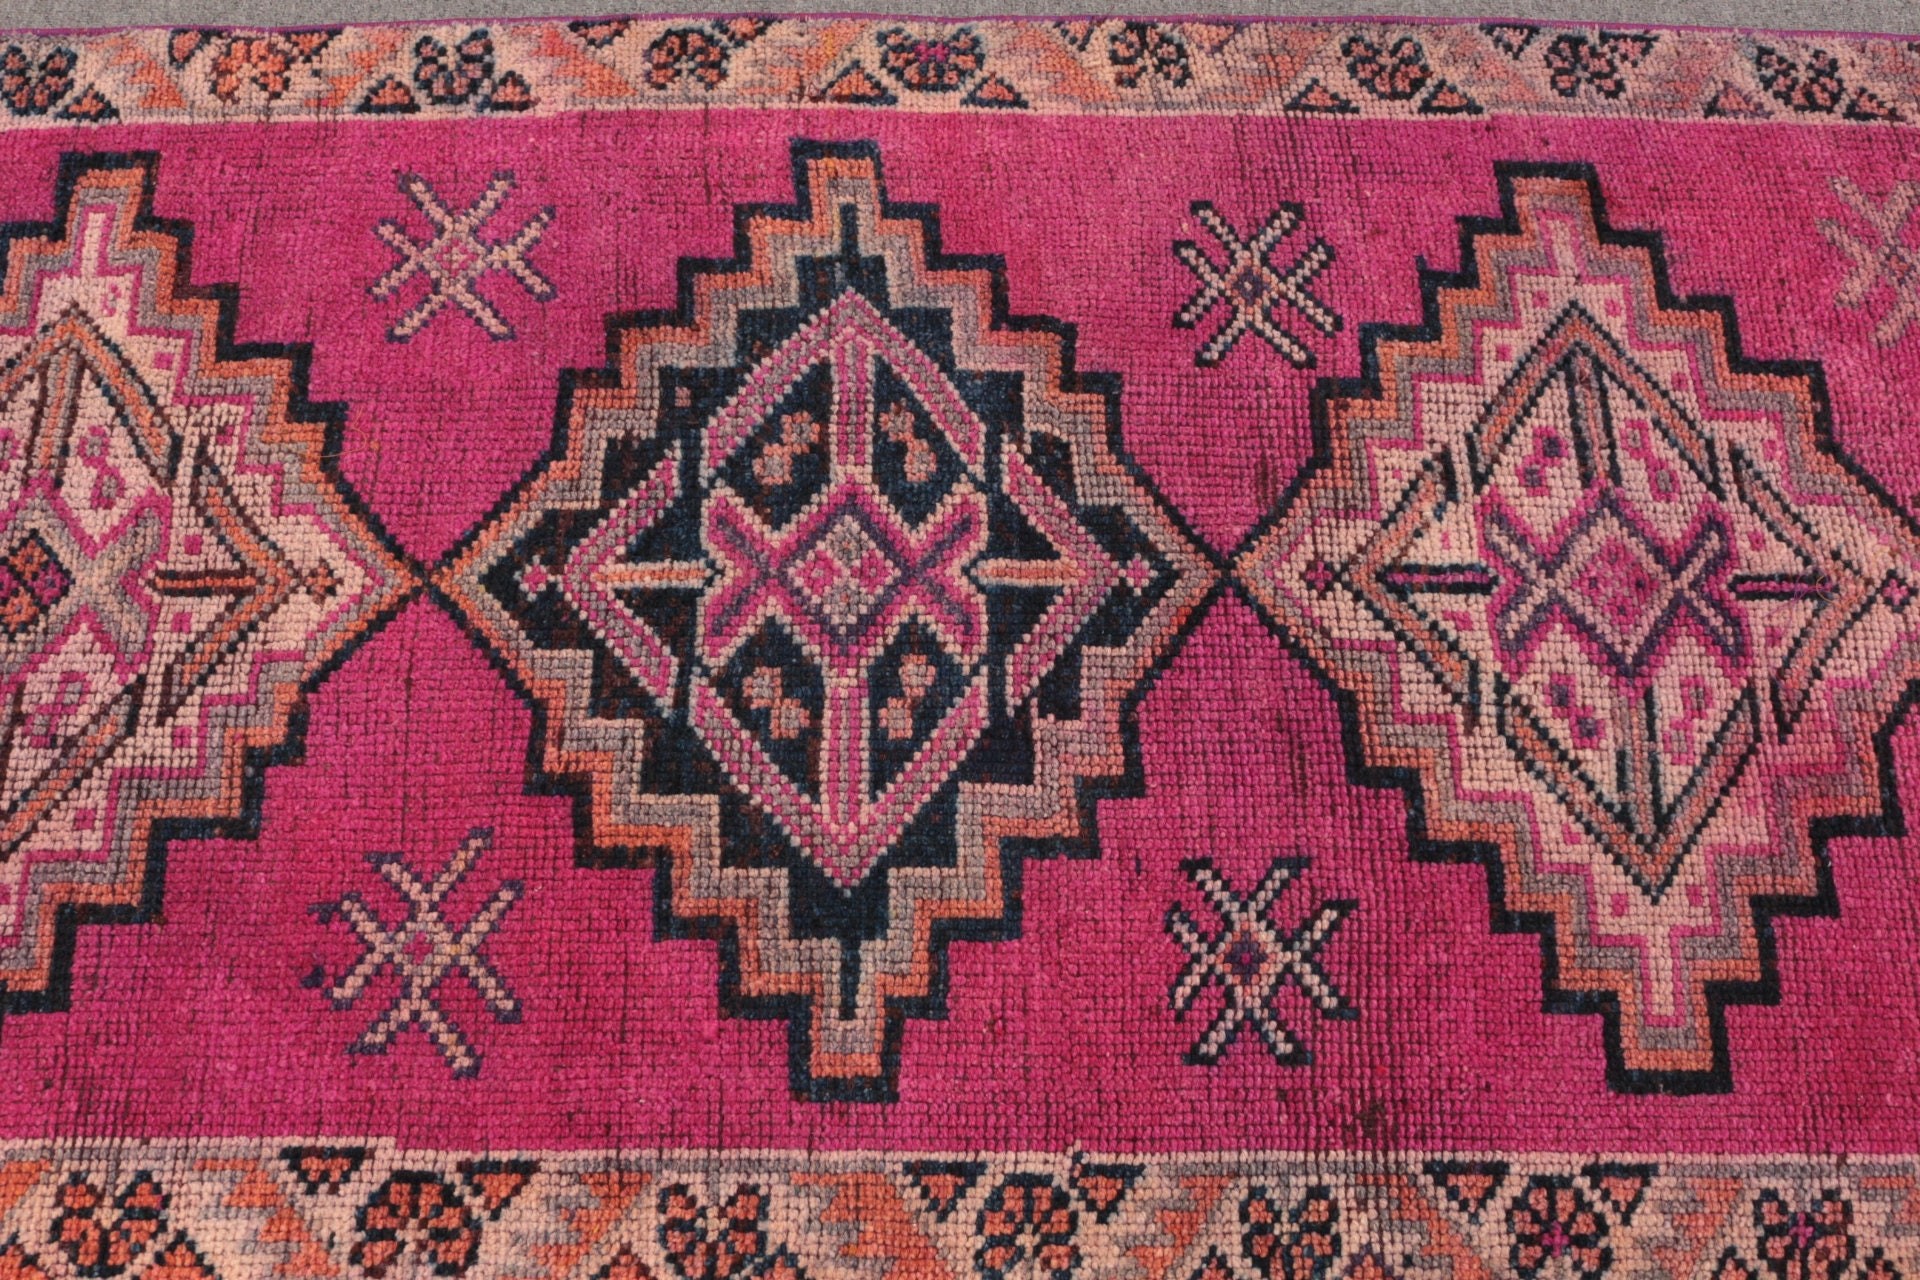 Pink Cool Rugs, Bedroom Rugs, Turkish Rug, Vintage Rug, Kitchen Rugs, Office Rugs, 2.8x9.4 ft Runner Rug, Anatolian Rugs, Rugs for Corridor